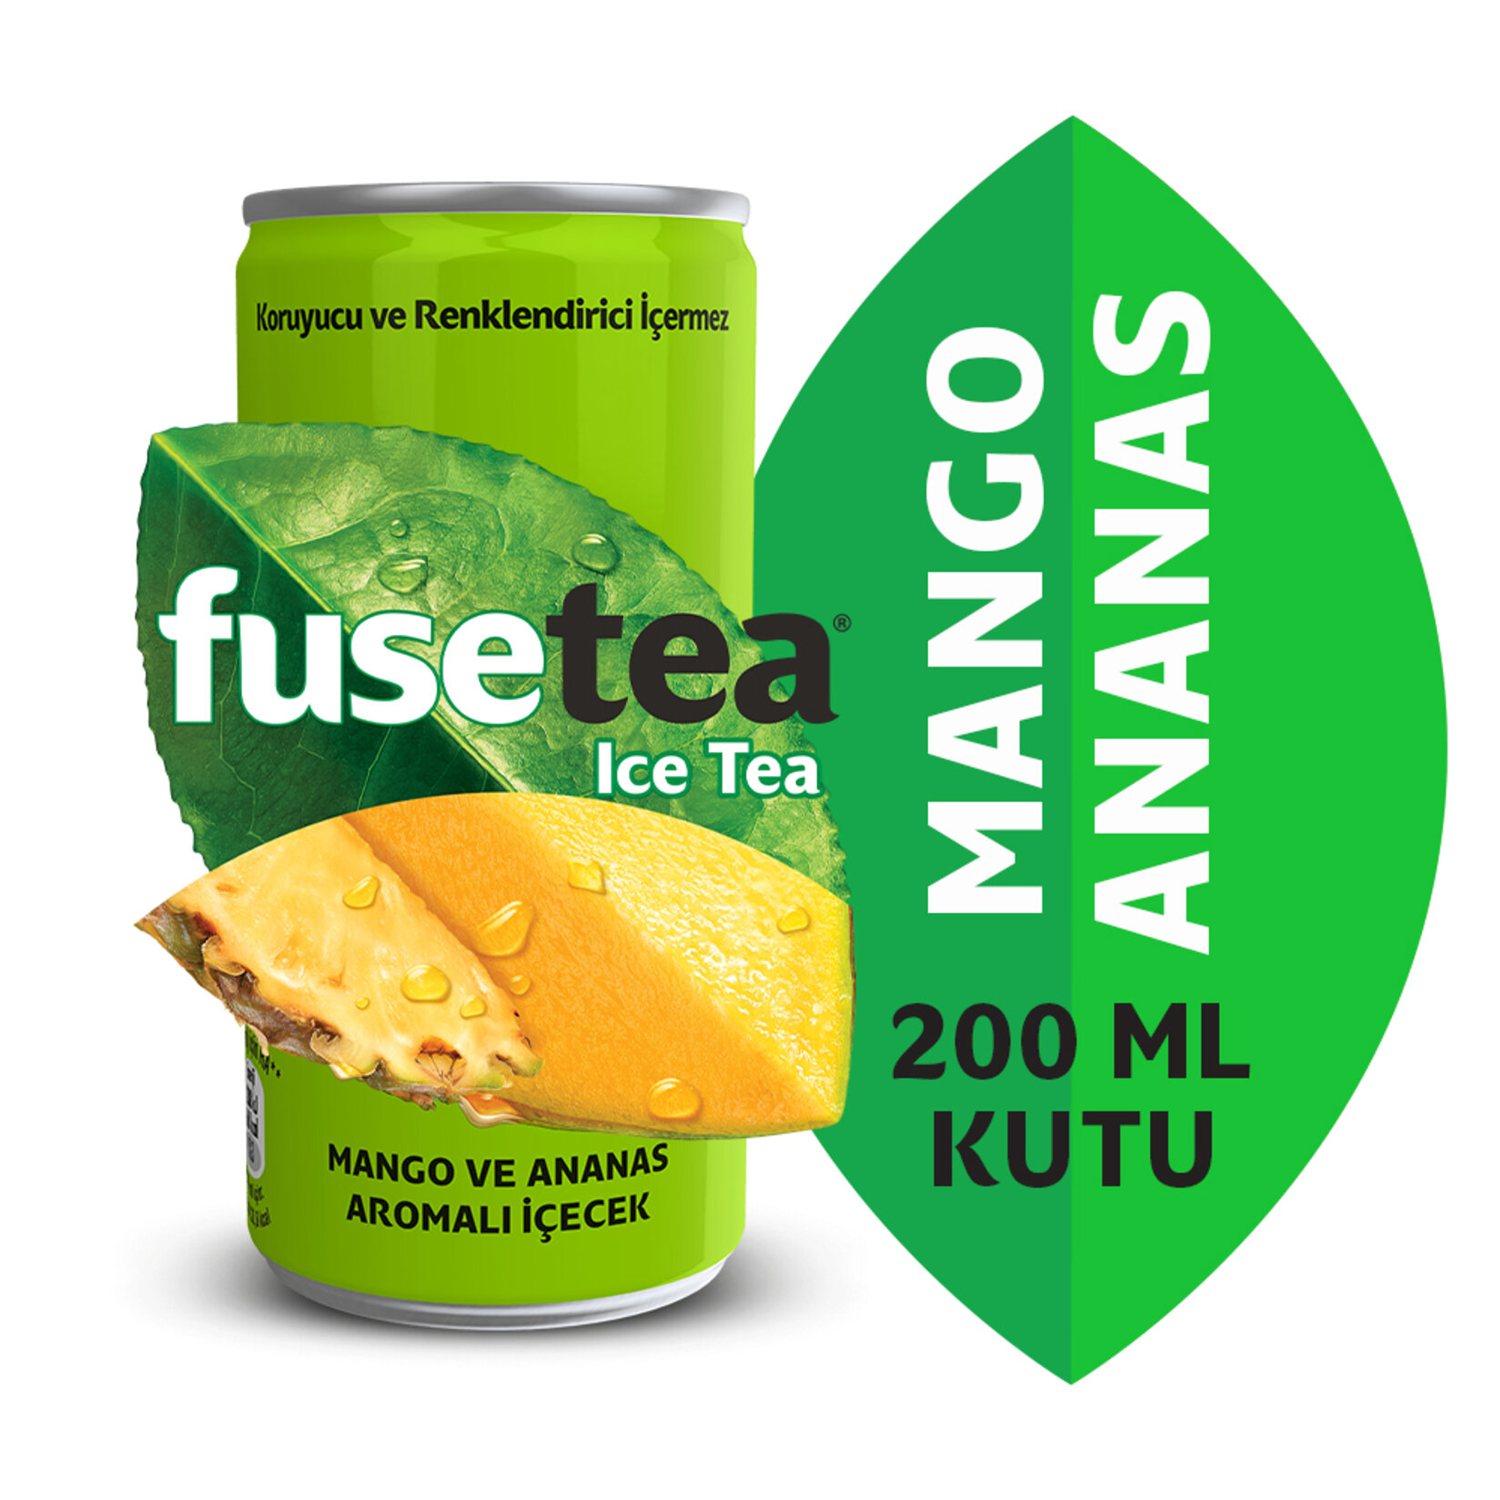 Fuse Tea Mango Ananas Aromalı 200 ML